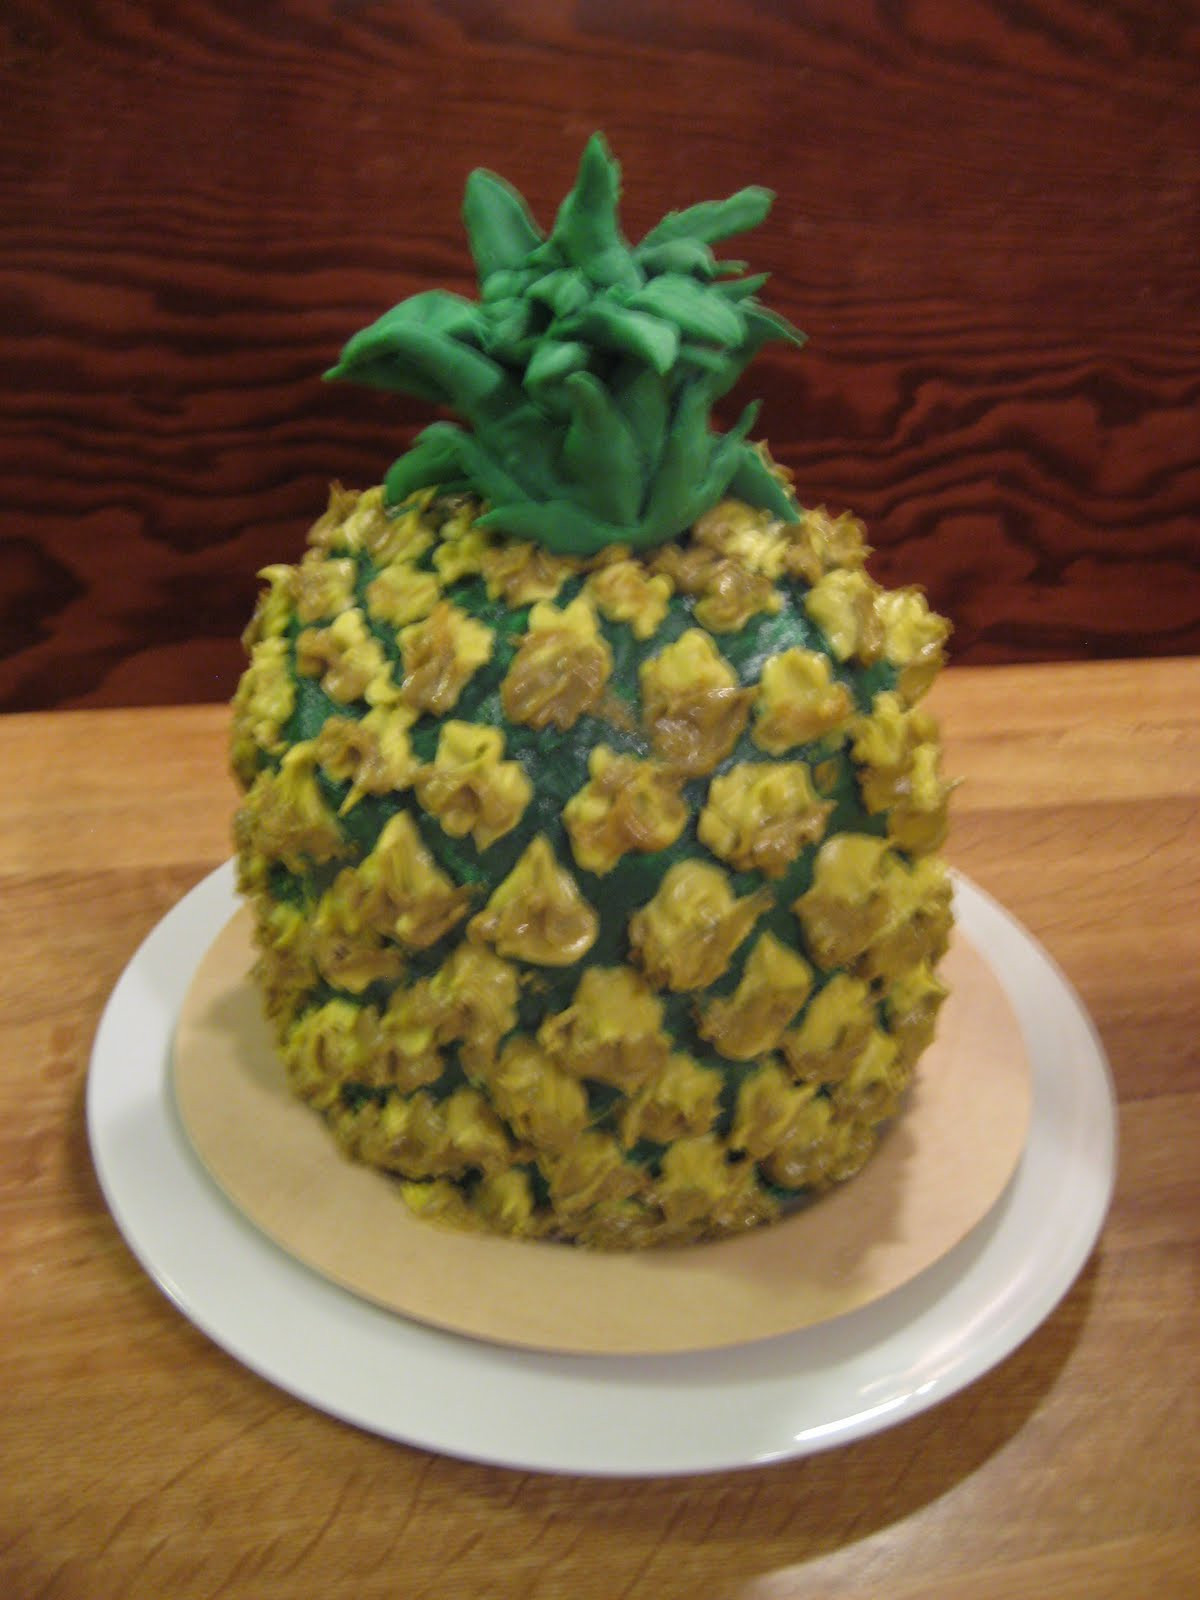 Best ideas about Pineapple Birthday Cake
. Save or Pin Amy Kucharik Creative Pineapple cake Now.